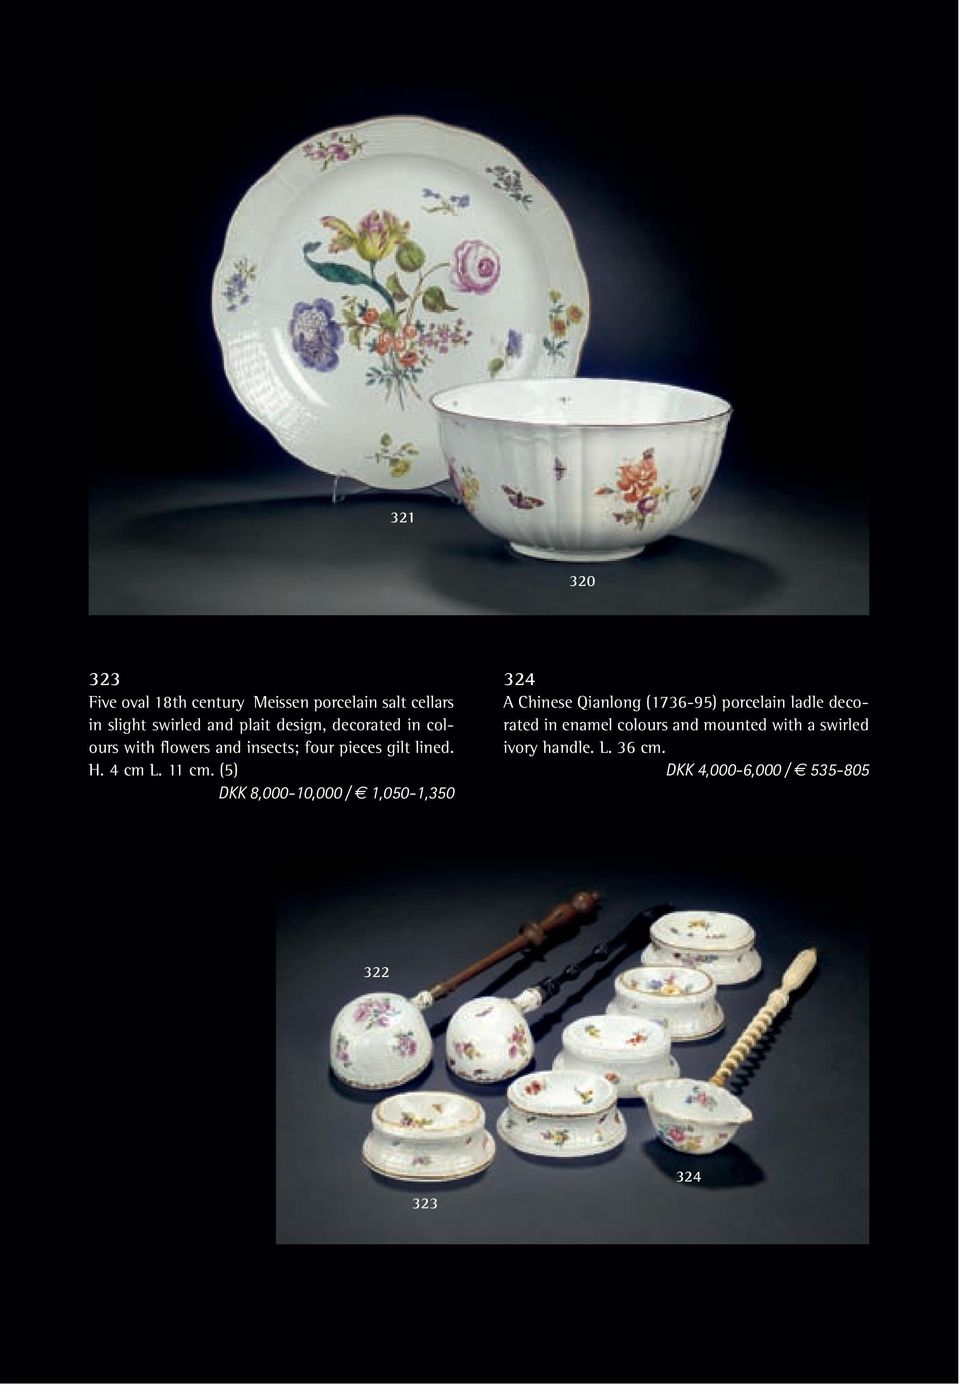 (5) DKK 8,000-10,000 / 1,050-1,350 324 A Chinese Qianlong (1736-95) porcelain ladle decorated in enamel